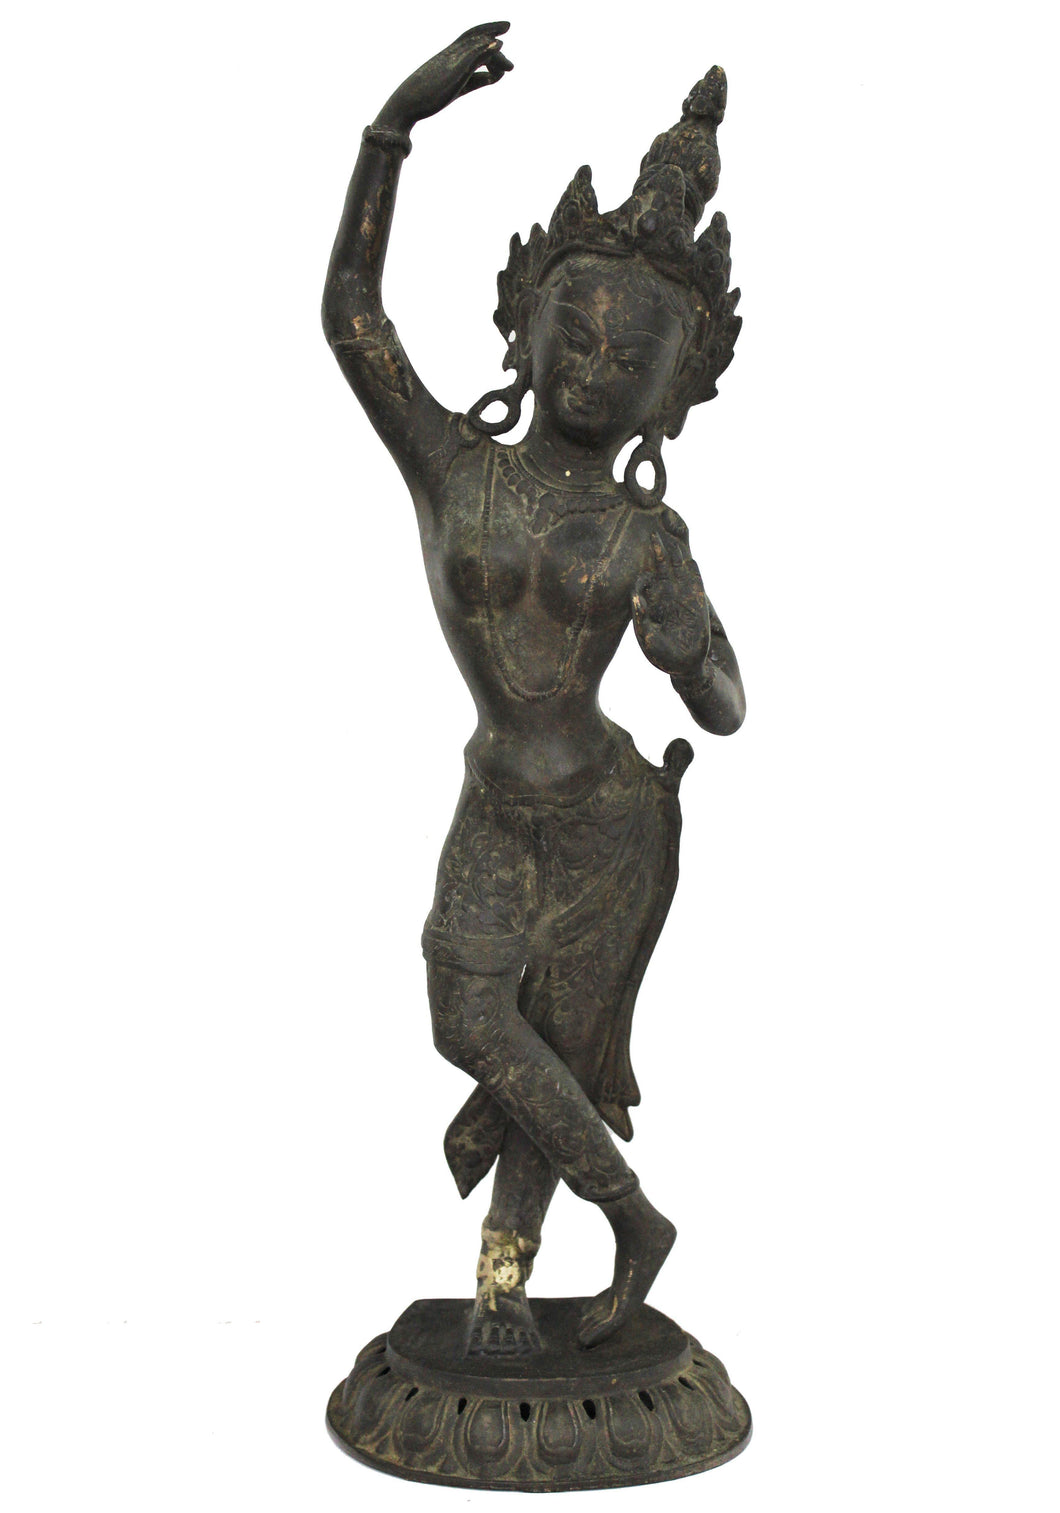 Vintage Indian Dancer Lady Antique Decoration Statue Size 17.5 x 11.5 x 52.7 cm - Style It by Hanika